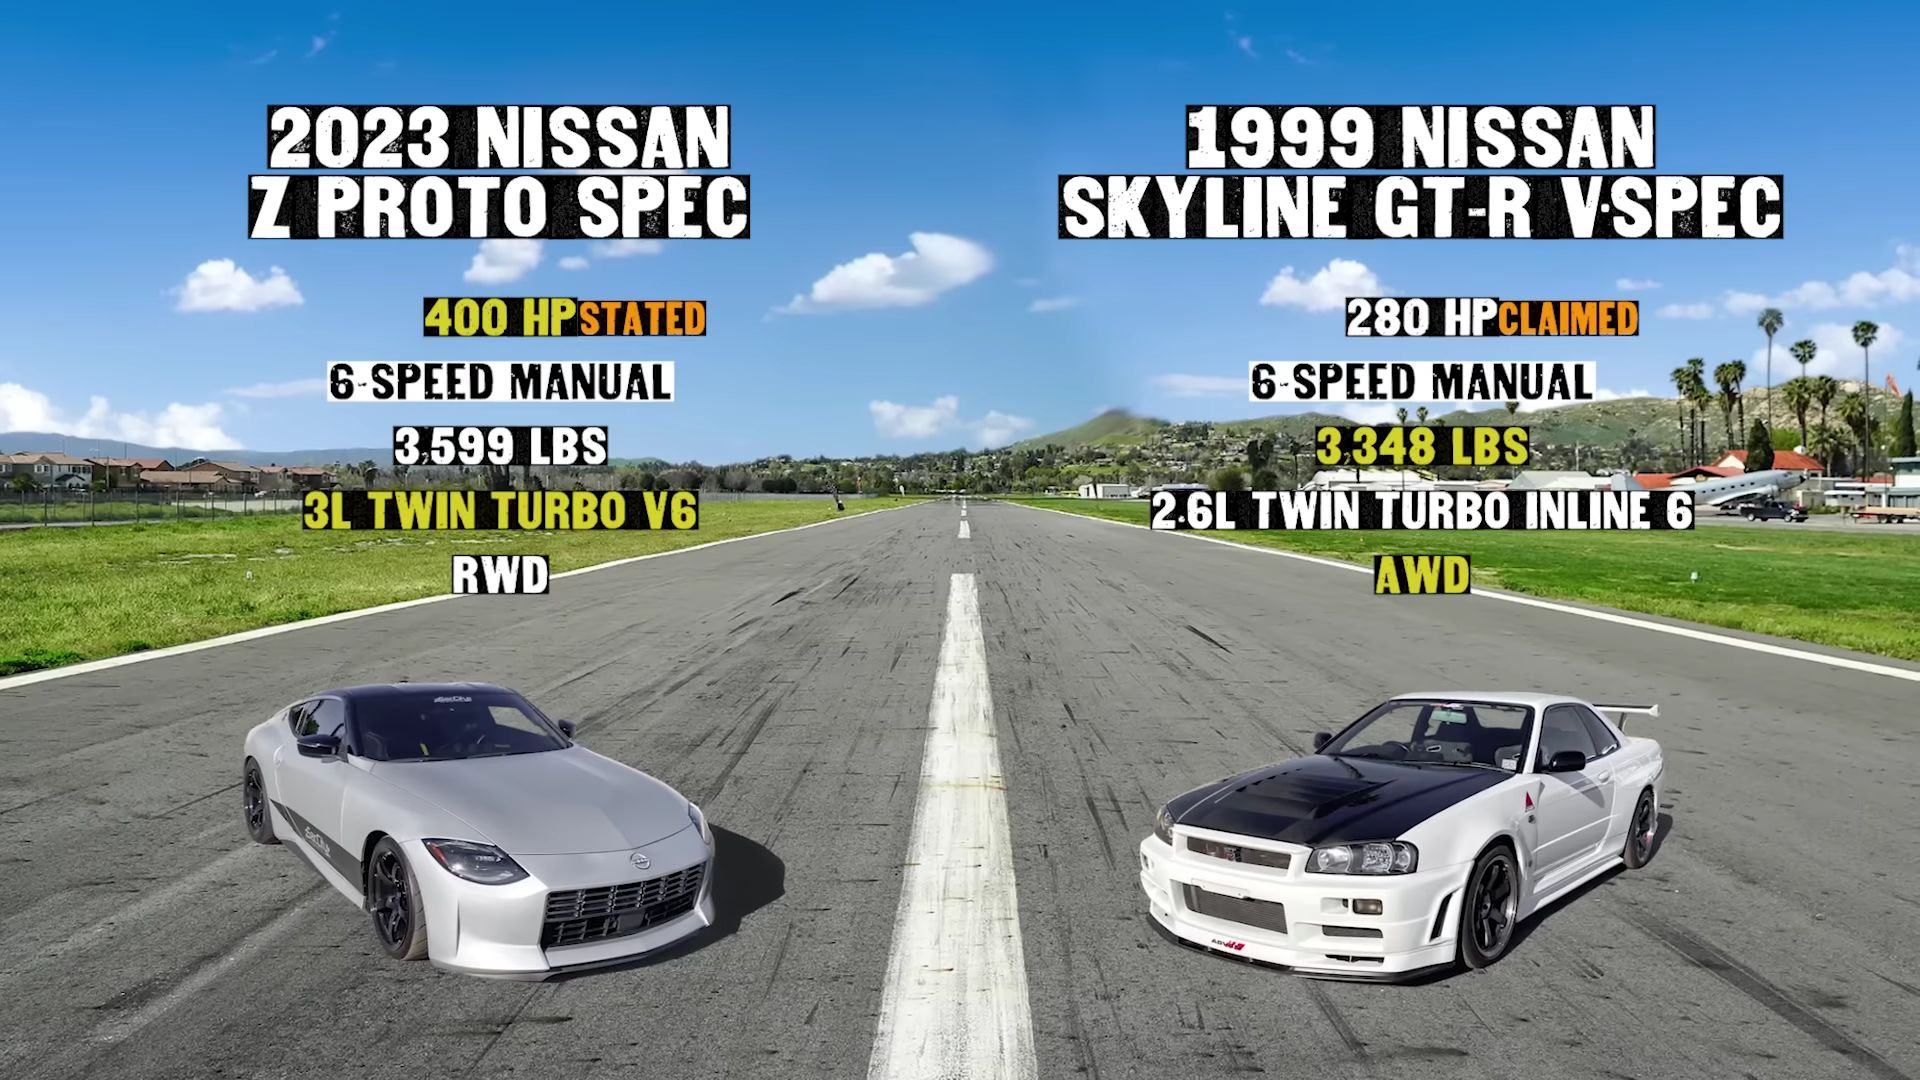 1999 Nissan Skyline GT-R V-Spec (R34) - The Tribute